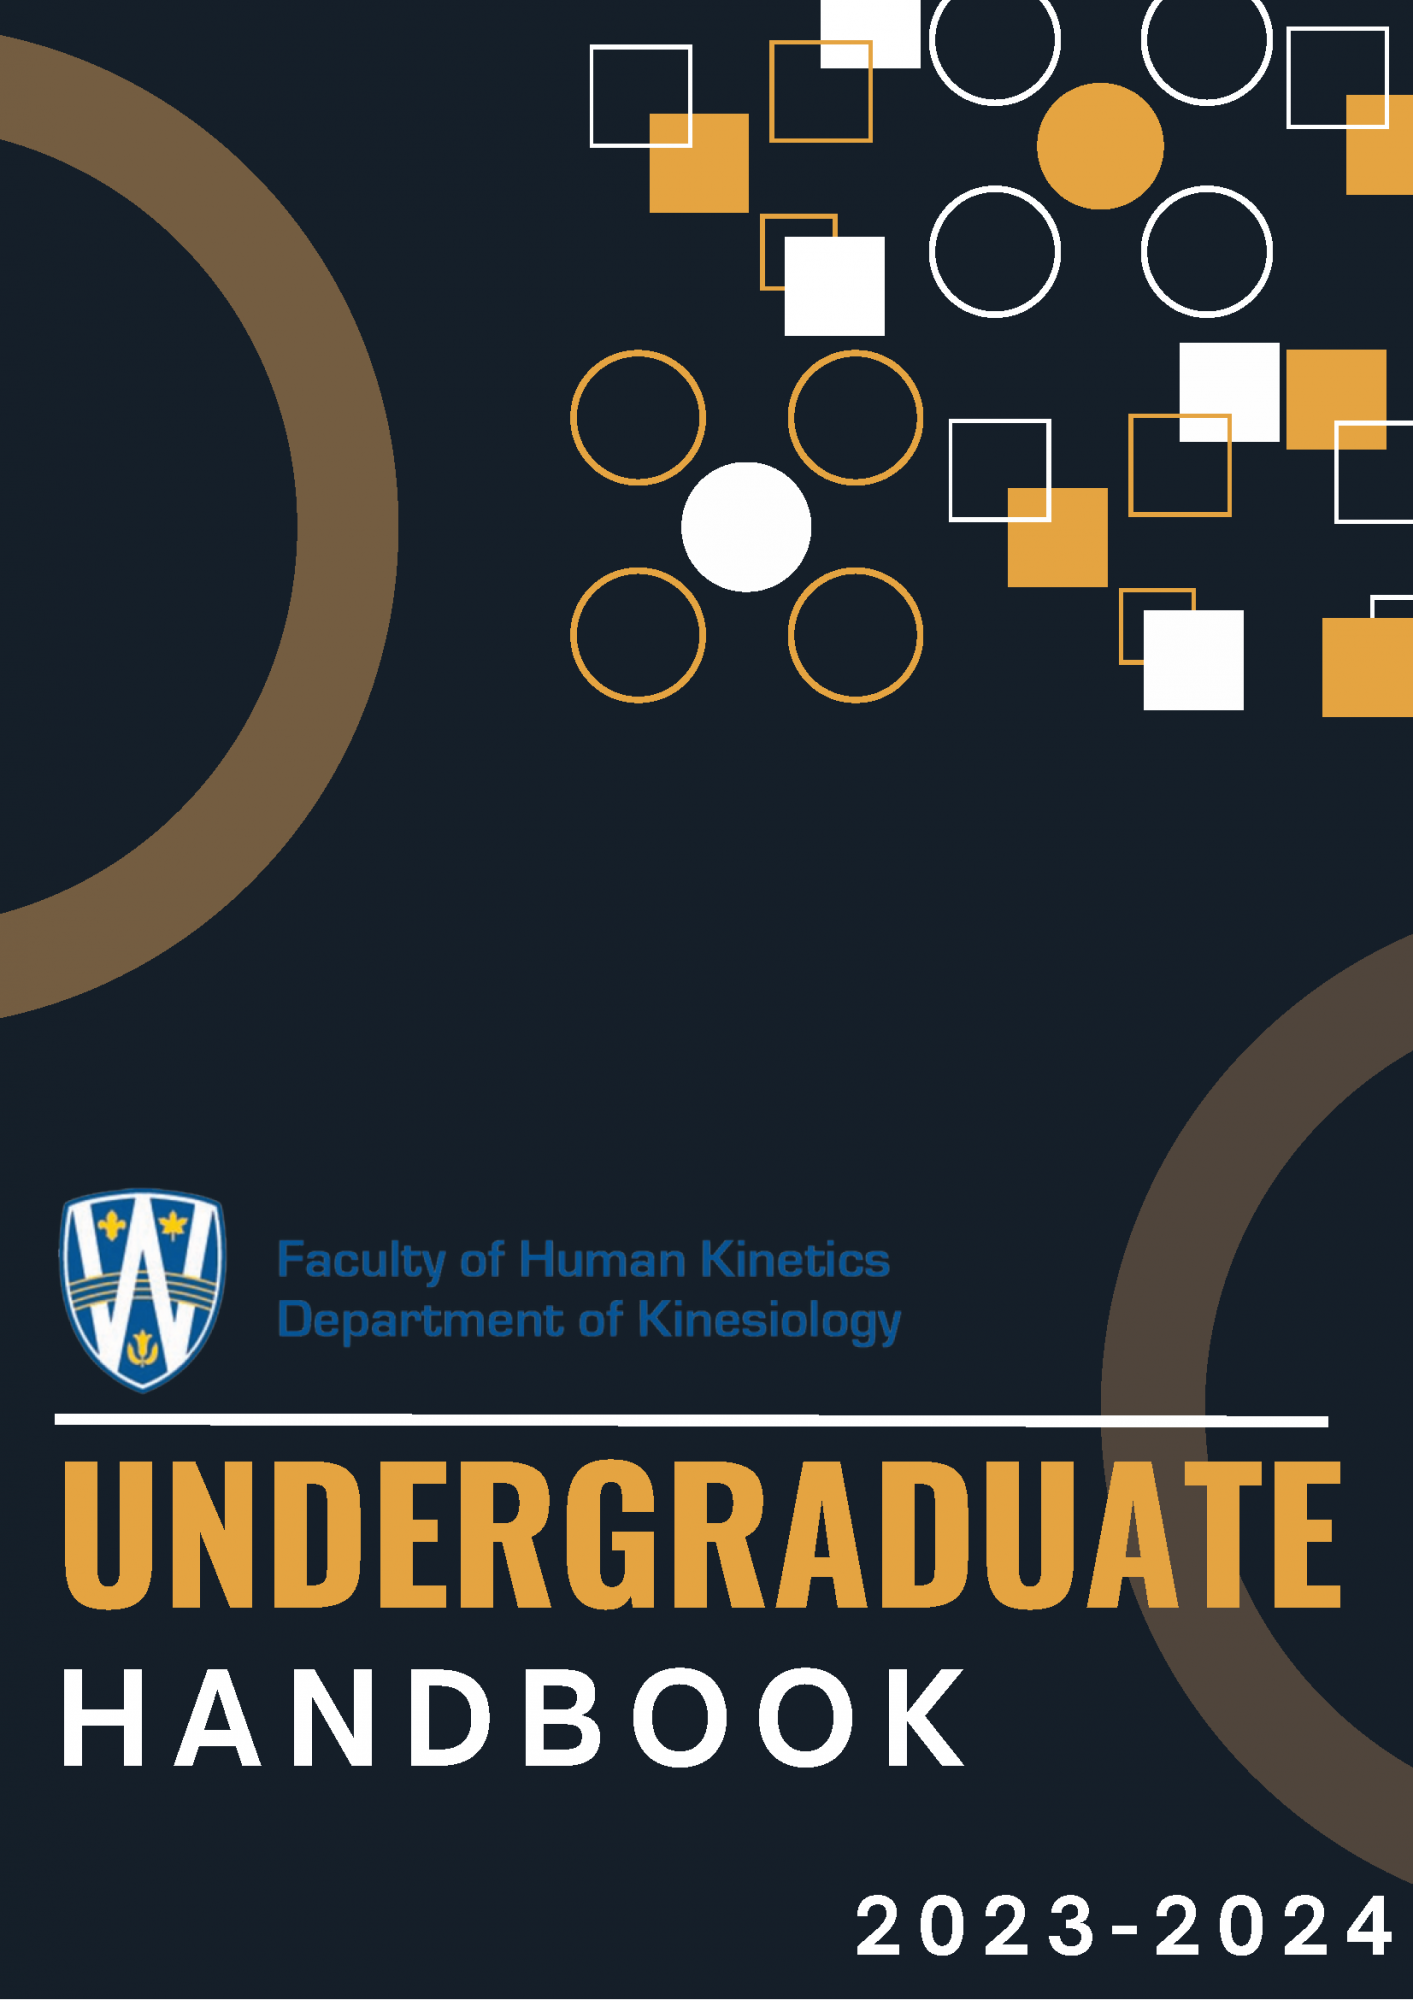 UWindsor's undergraduate handbook